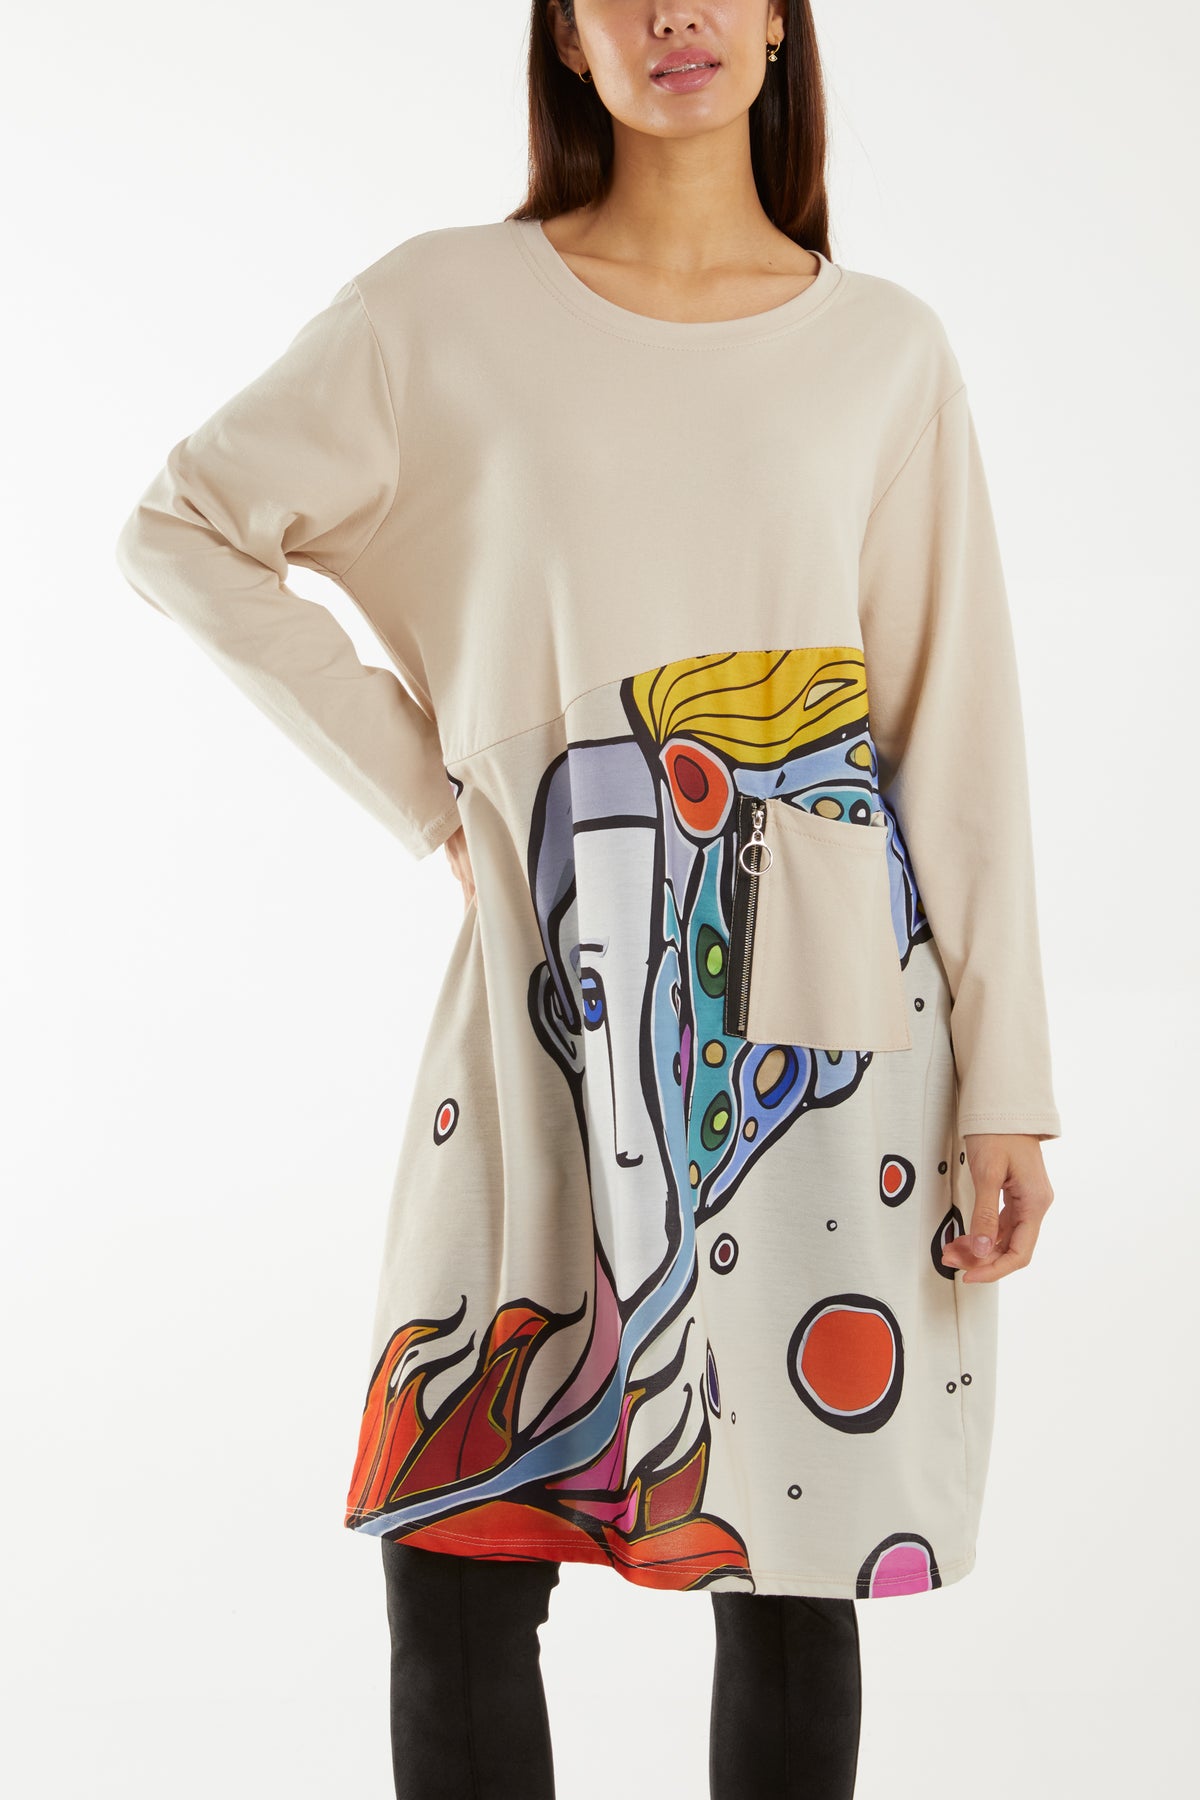 Surreal Print Contrast Mini Dress/Longline Top